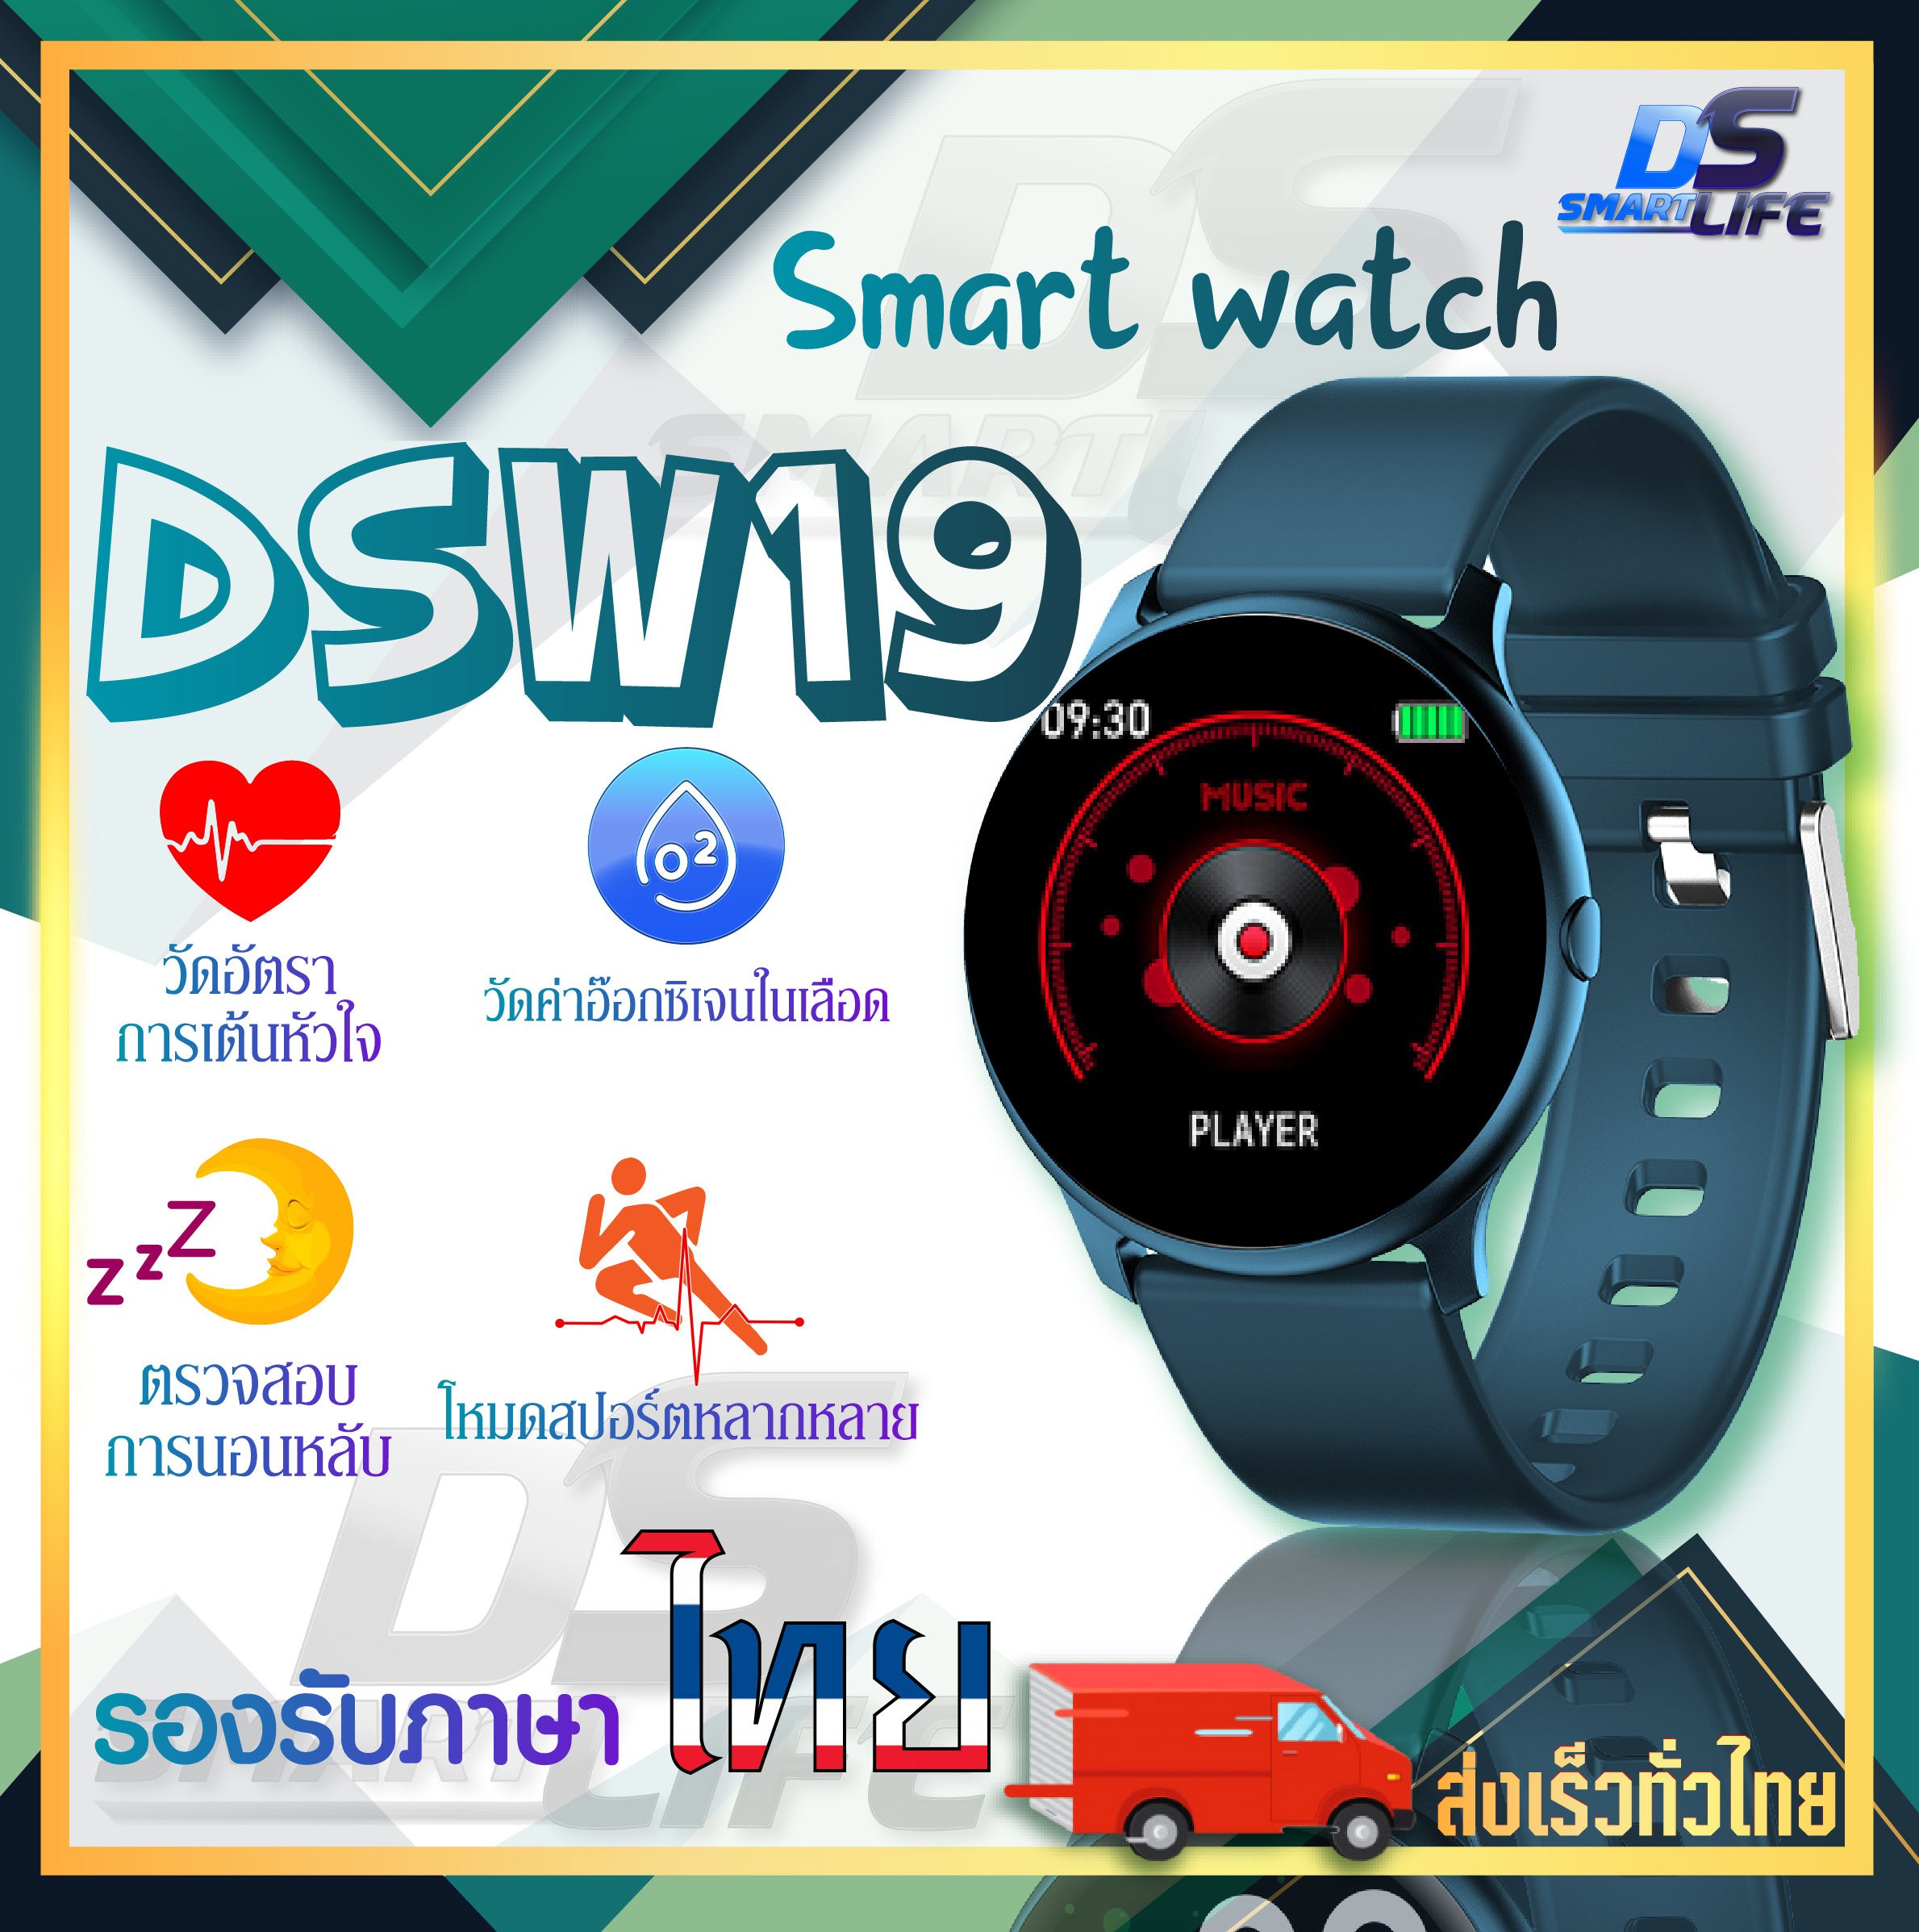 Smart Watch KW19 นาฬิกาสมาร์ทวอทช์ รุ่น นาฬิกาอัจฉริยะ ฟิตเนสแทรคเกอร์ สายรัดข้อมืออัจฉริยะ สายรัดข้อมือเพื่อสุขภาพ นาฬิกาข้อมือ นาฬิกา นาฬิกาแฟชั่น นาฬิการุ่นใหม่ Smart Band Fitness Tracker Smart Bracelet รุ่นใหม่ปี 2020